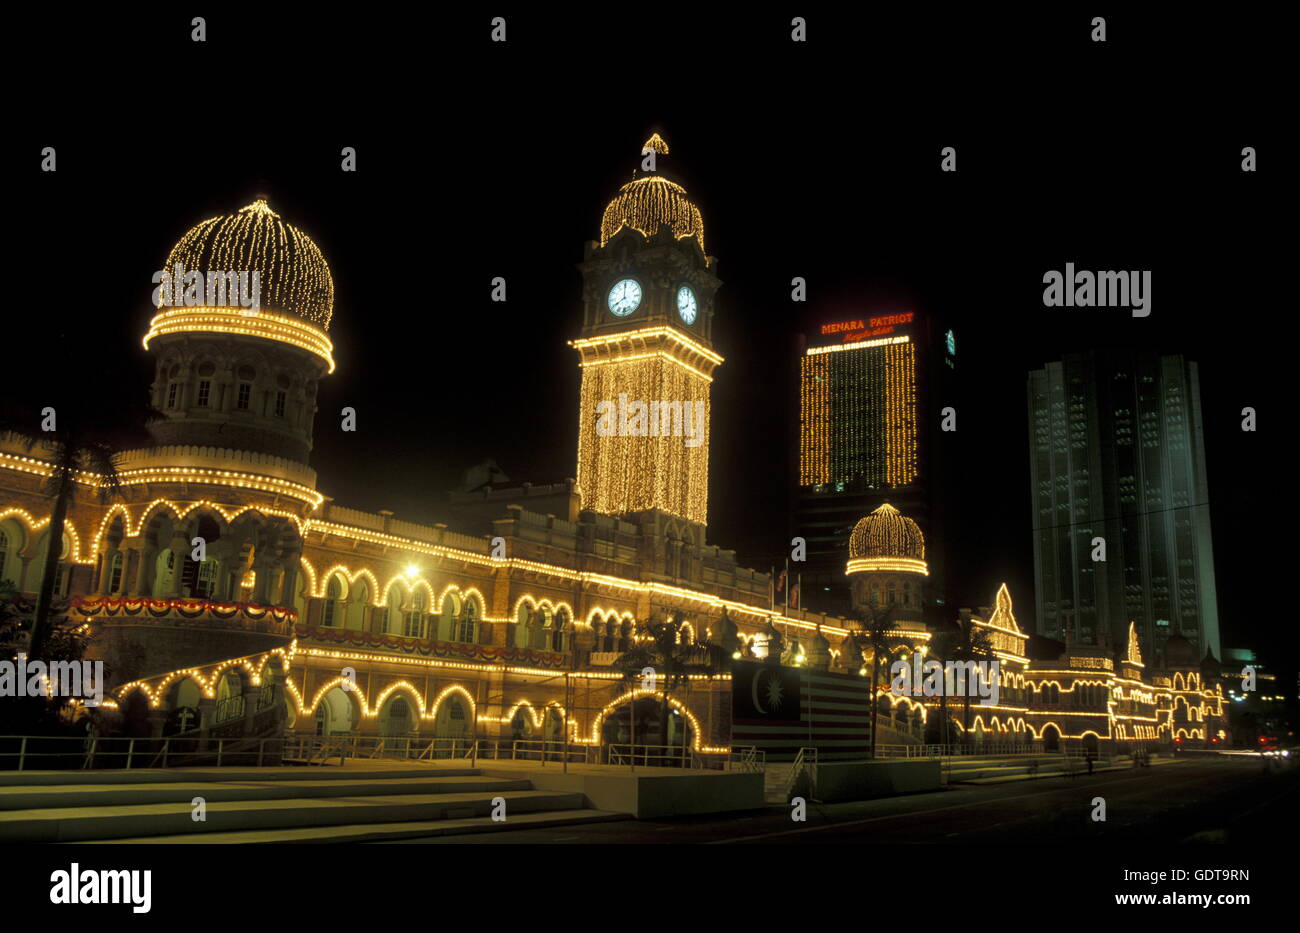 El Sultán Abdul Samad Palace en la Plaza Merdeka en la ciudad de Kuala Lumpur, en Malasia en southeastasia. Foto de stock